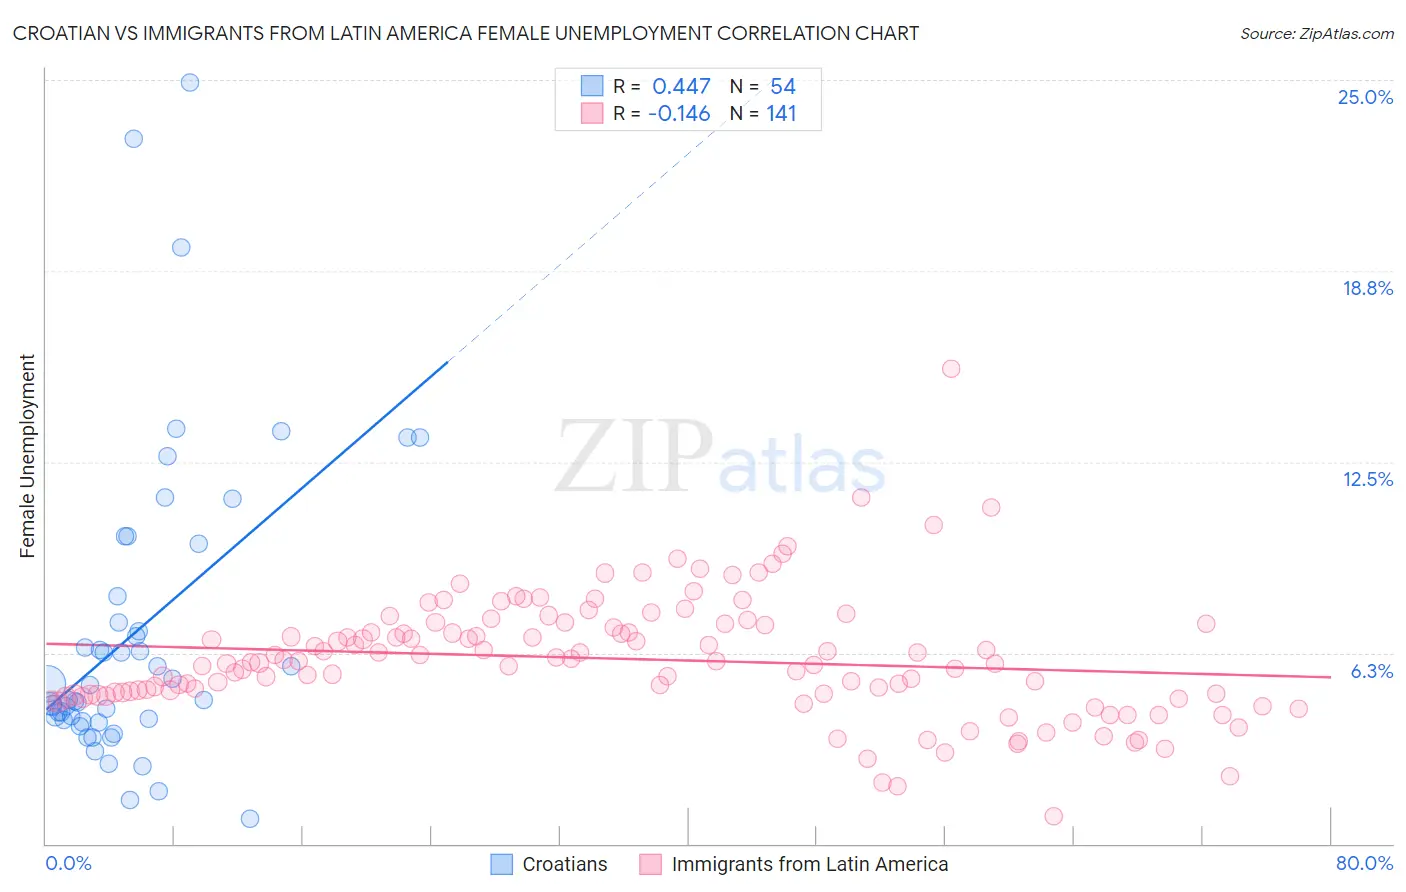 Croatian vs Immigrants from Latin America Female Unemployment